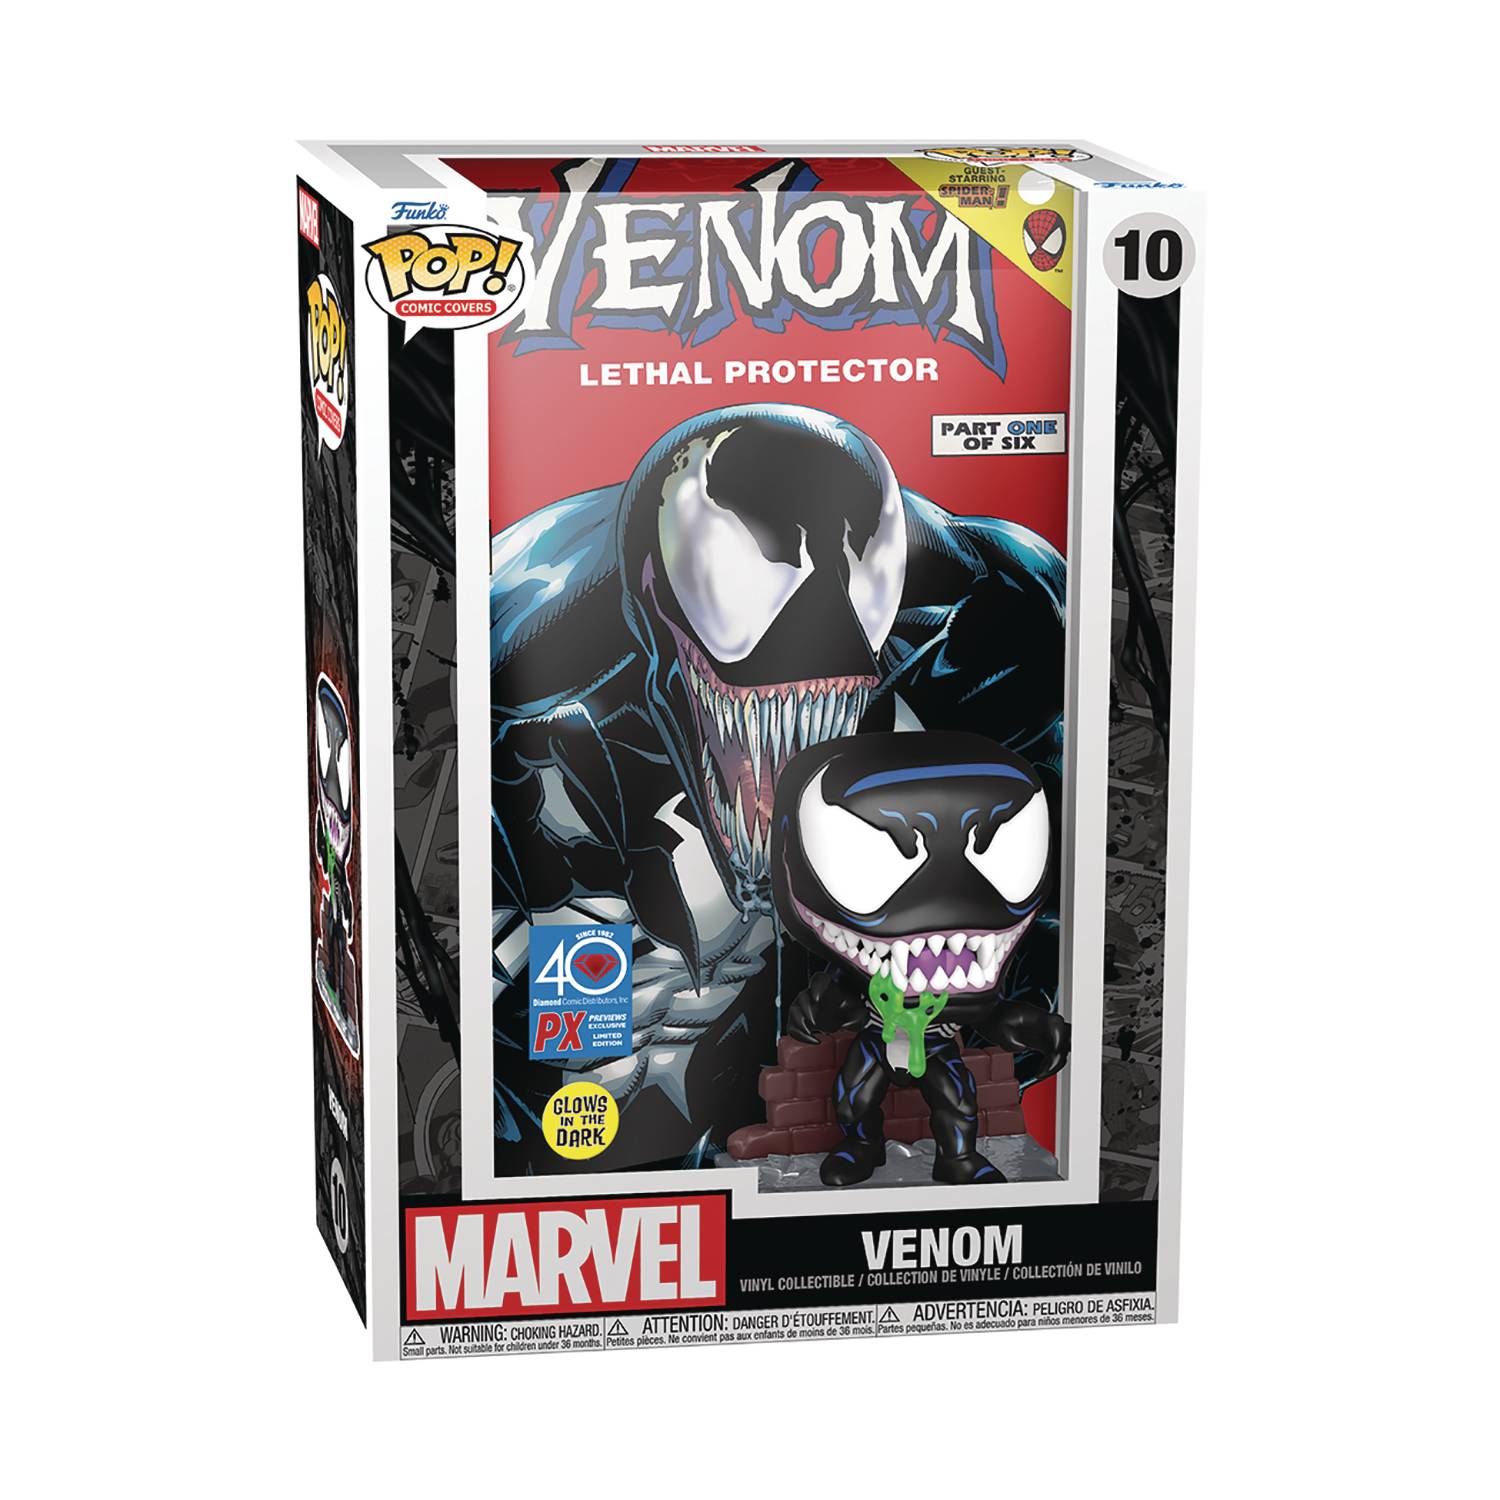 POP! Comic Cover: Marvel Venom Lethal Protector PX GID POP! Vinyl Figure by Funko